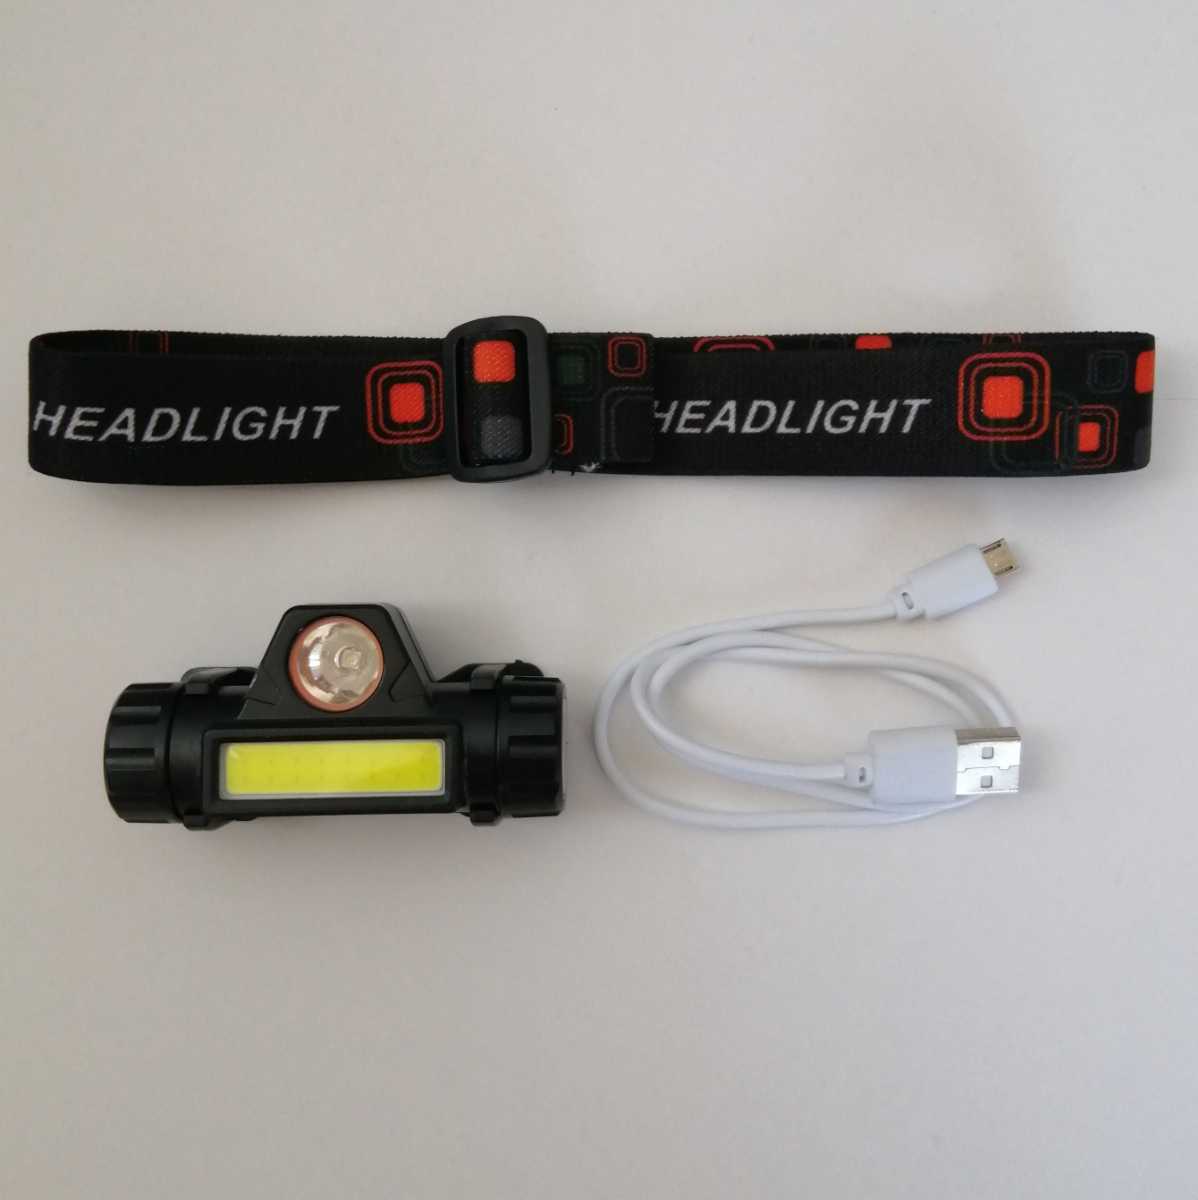 LED ヘッドライト 3個セット 充電式 作業灯 アウトドア 防災 防犯 防水 LEDヘッドライト ヘッドランプ 防水　3個